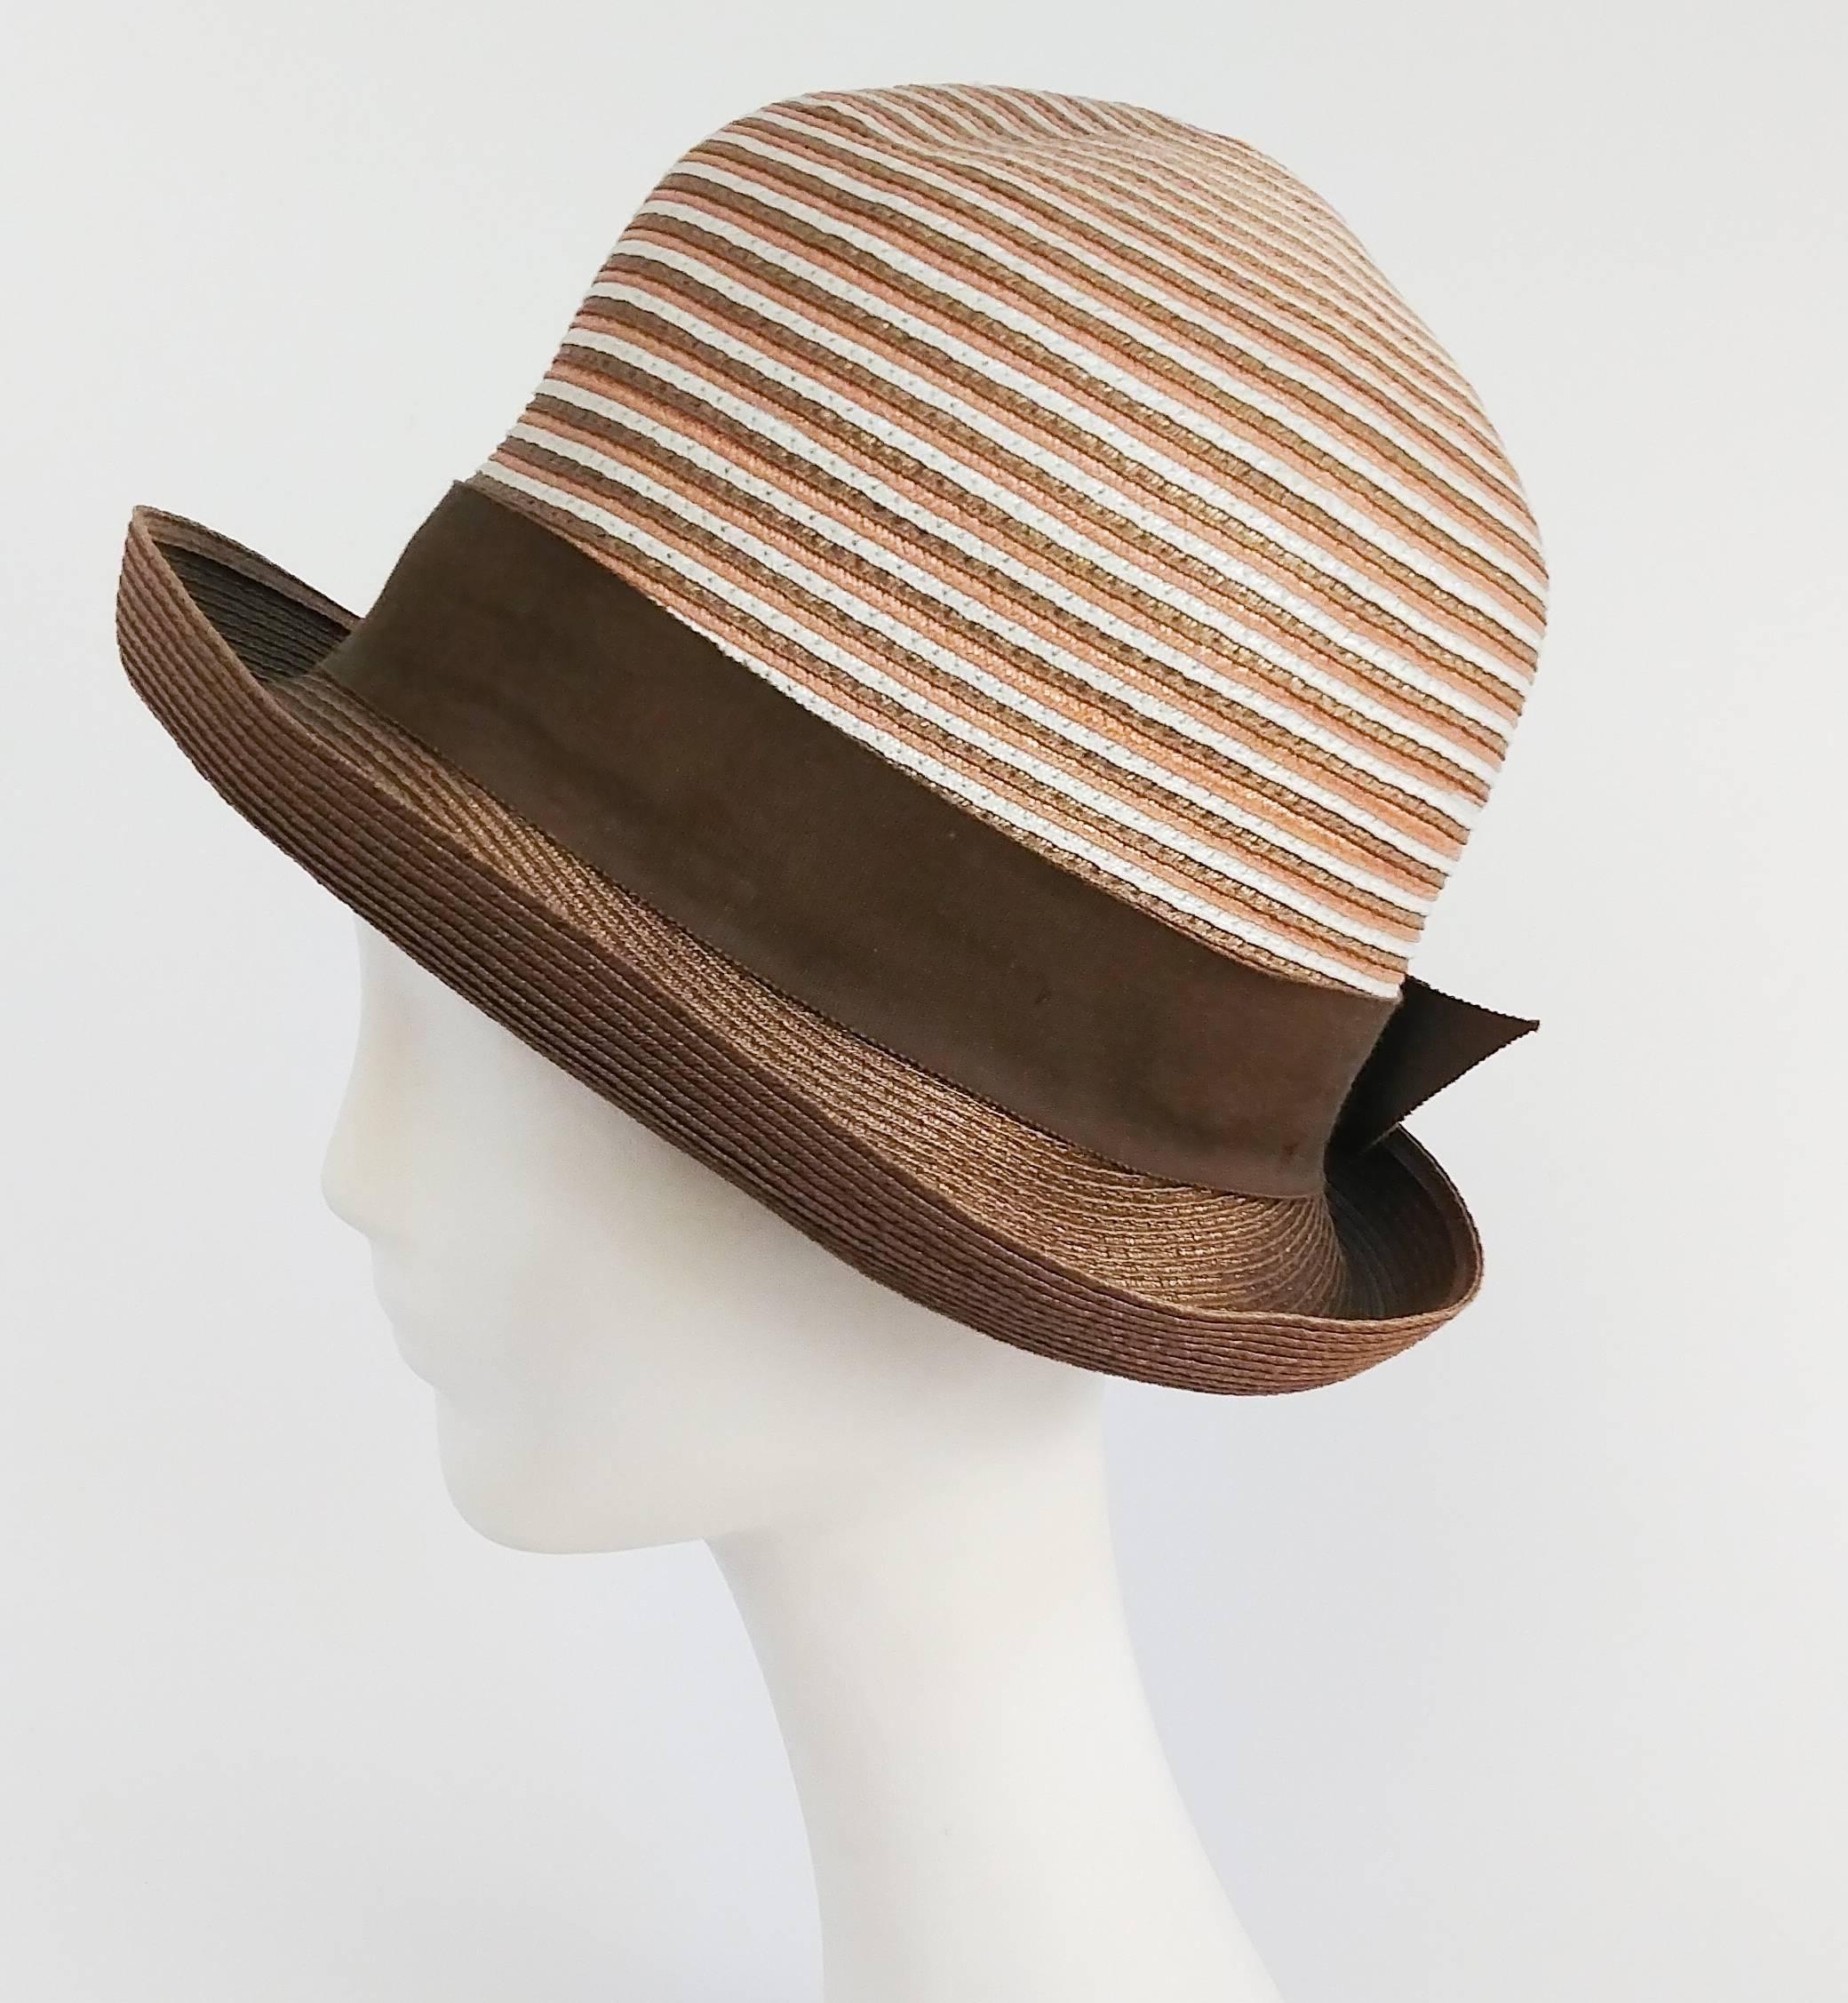 1960s Brown & White Stipe Woven Cloche Hat. Small fit.